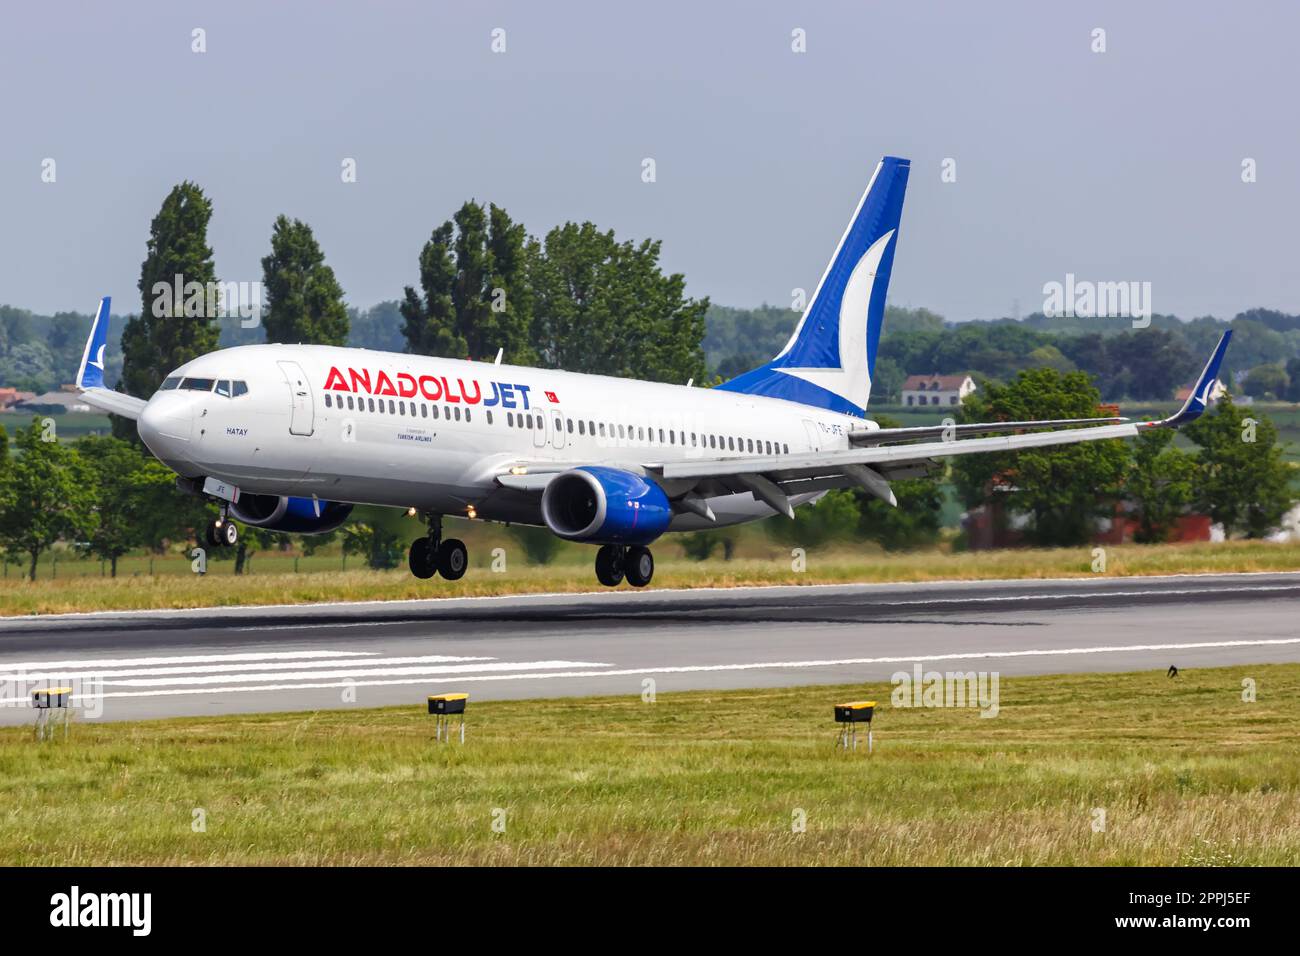 AnadoluJet Boeing 737-800 airplane Brussels airport in Belgium Stock Photo